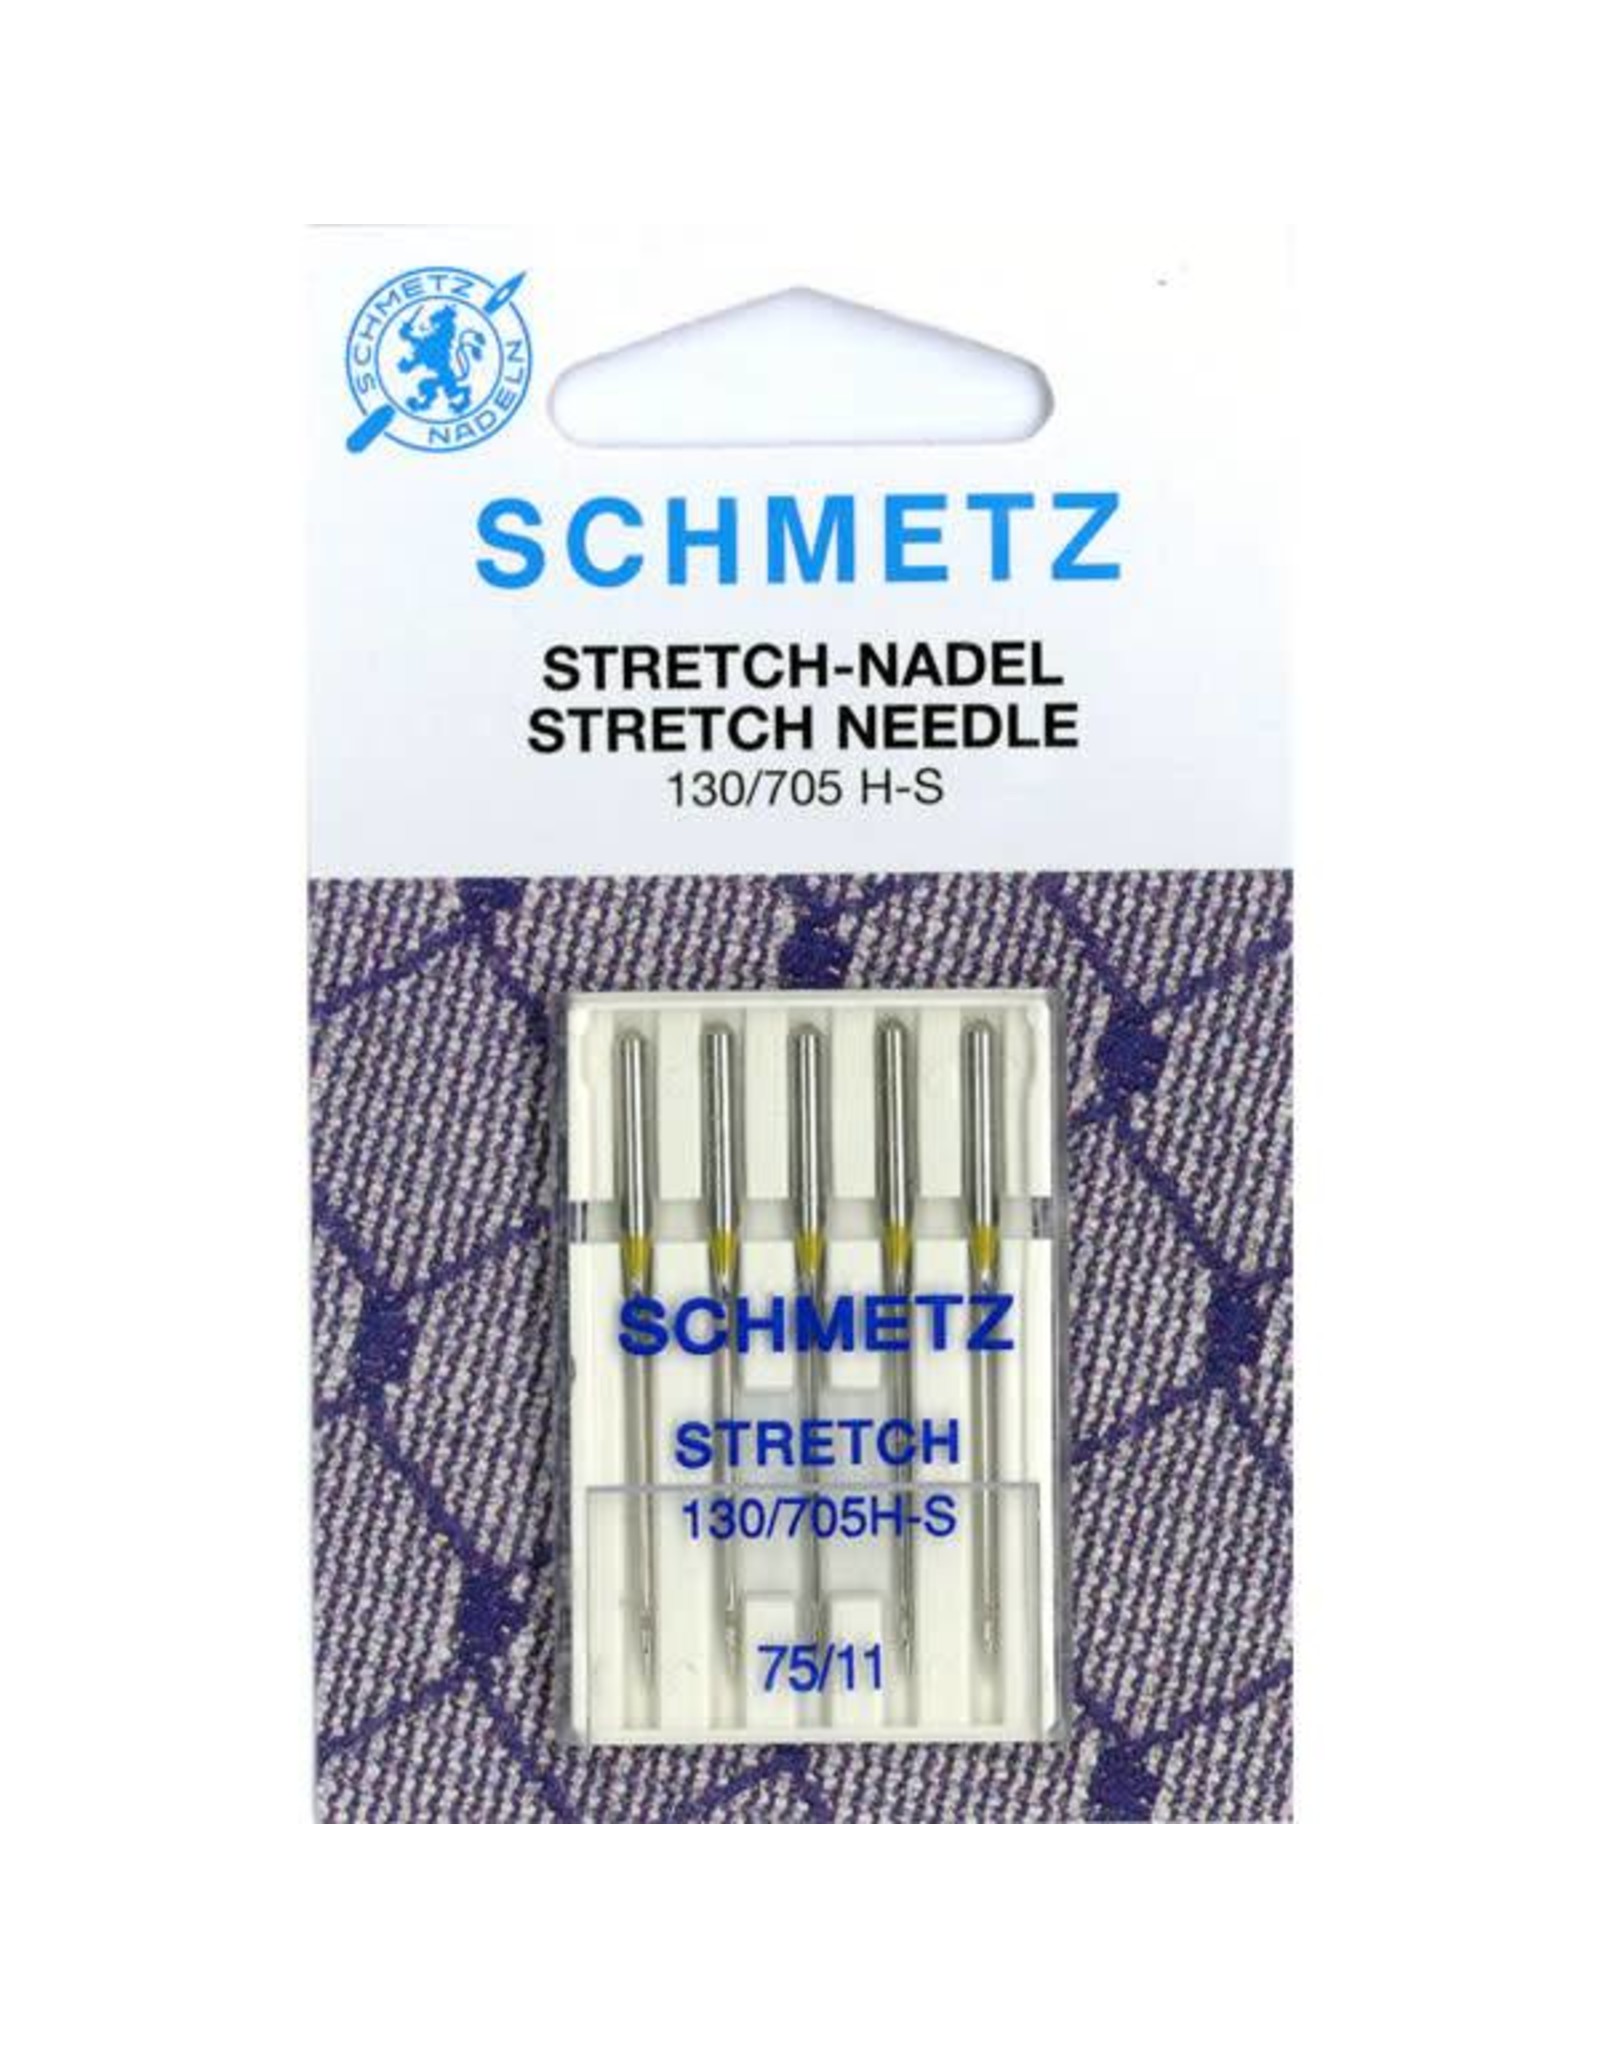 Schmetz Stretch Needle - 130/705 H-S - 75